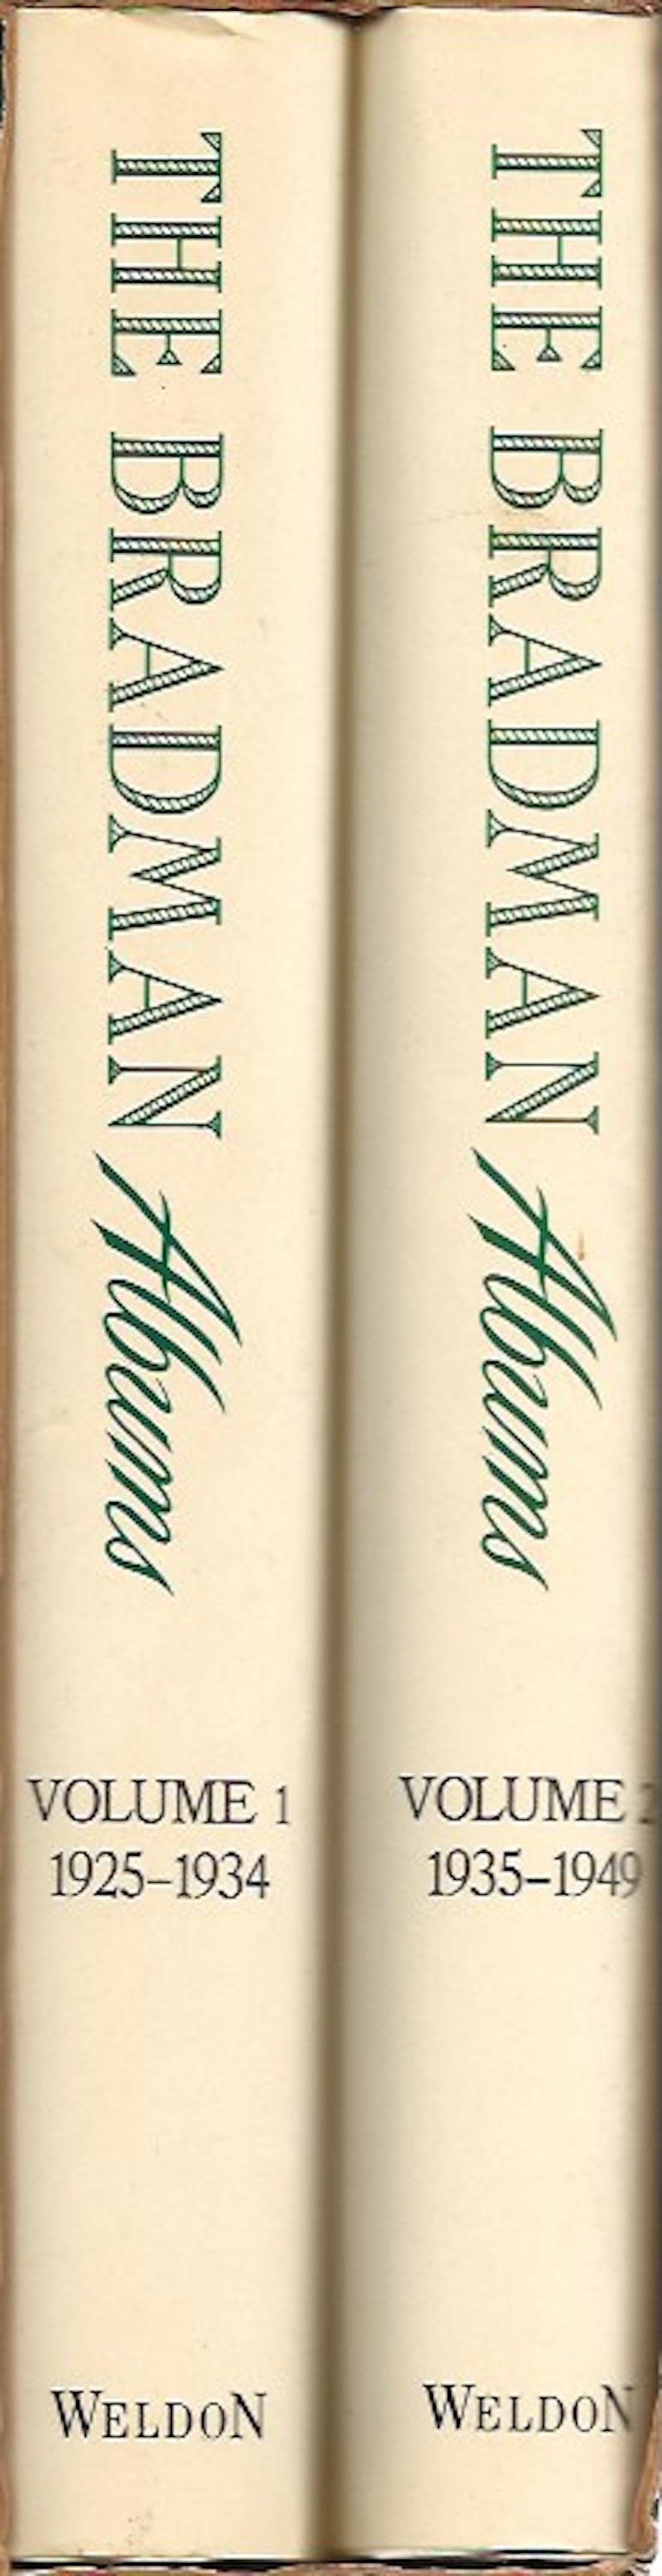 The Bradman Albums by Maclaren-Ross, J.